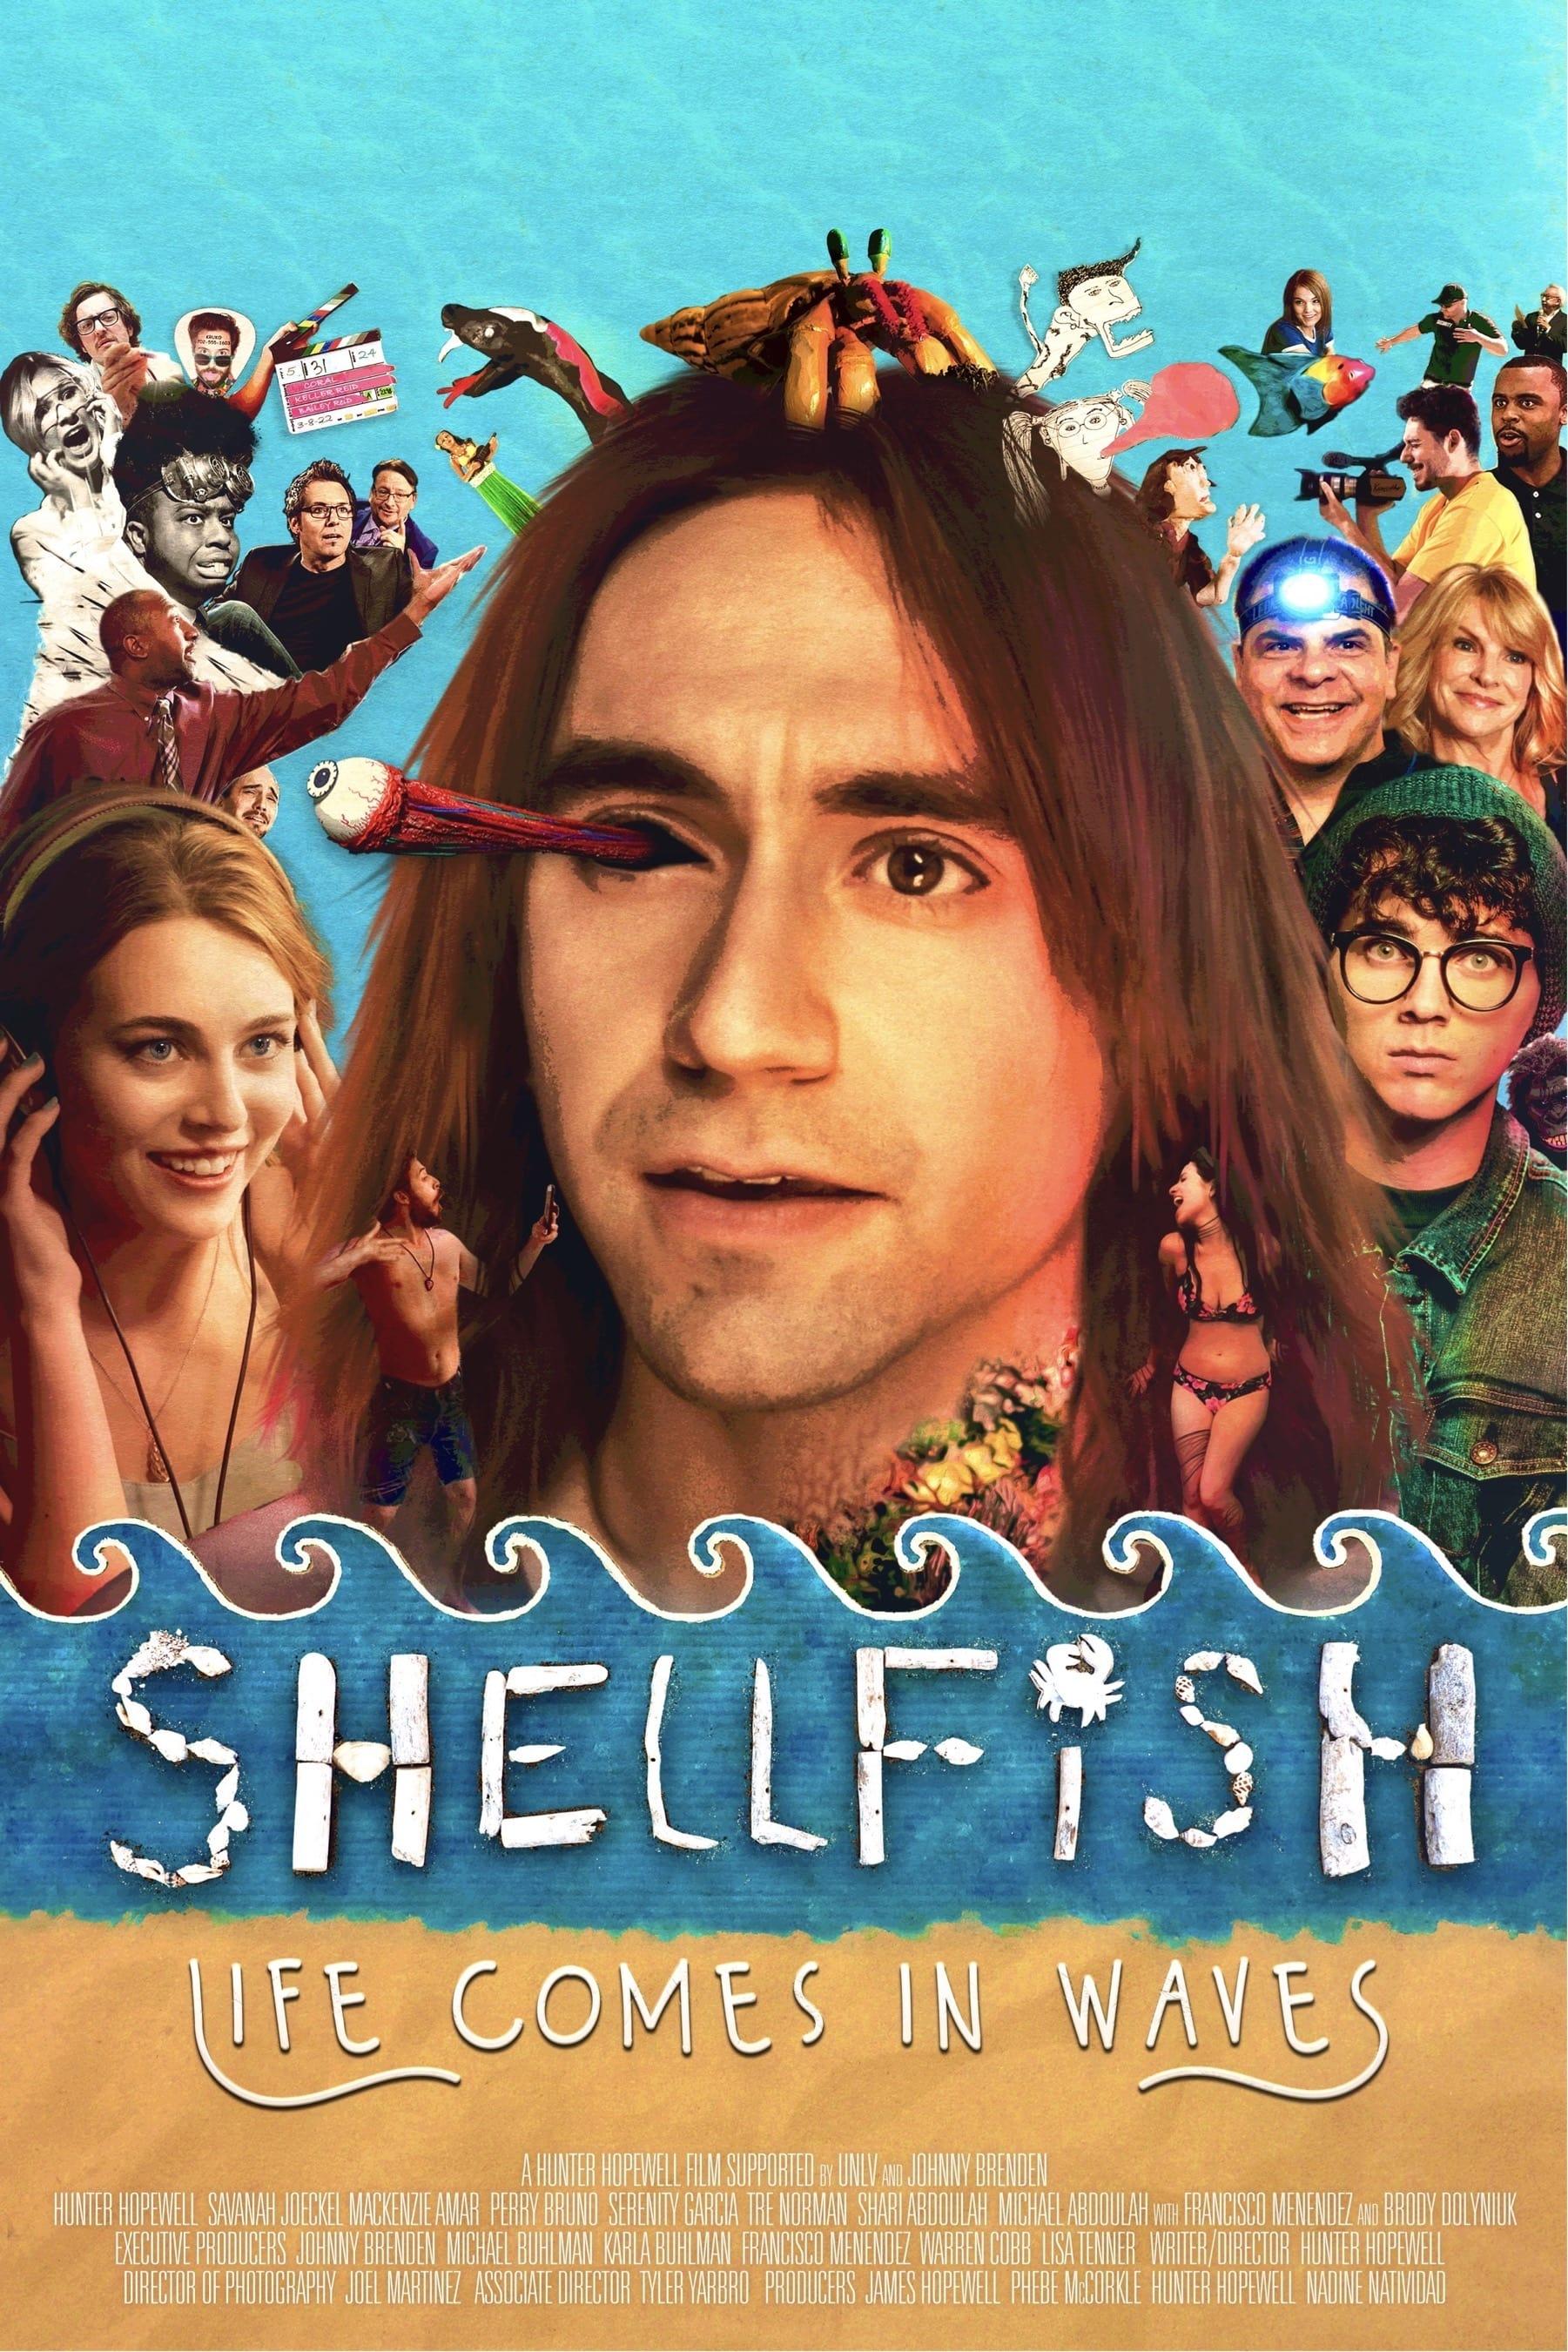 Shellfish poster